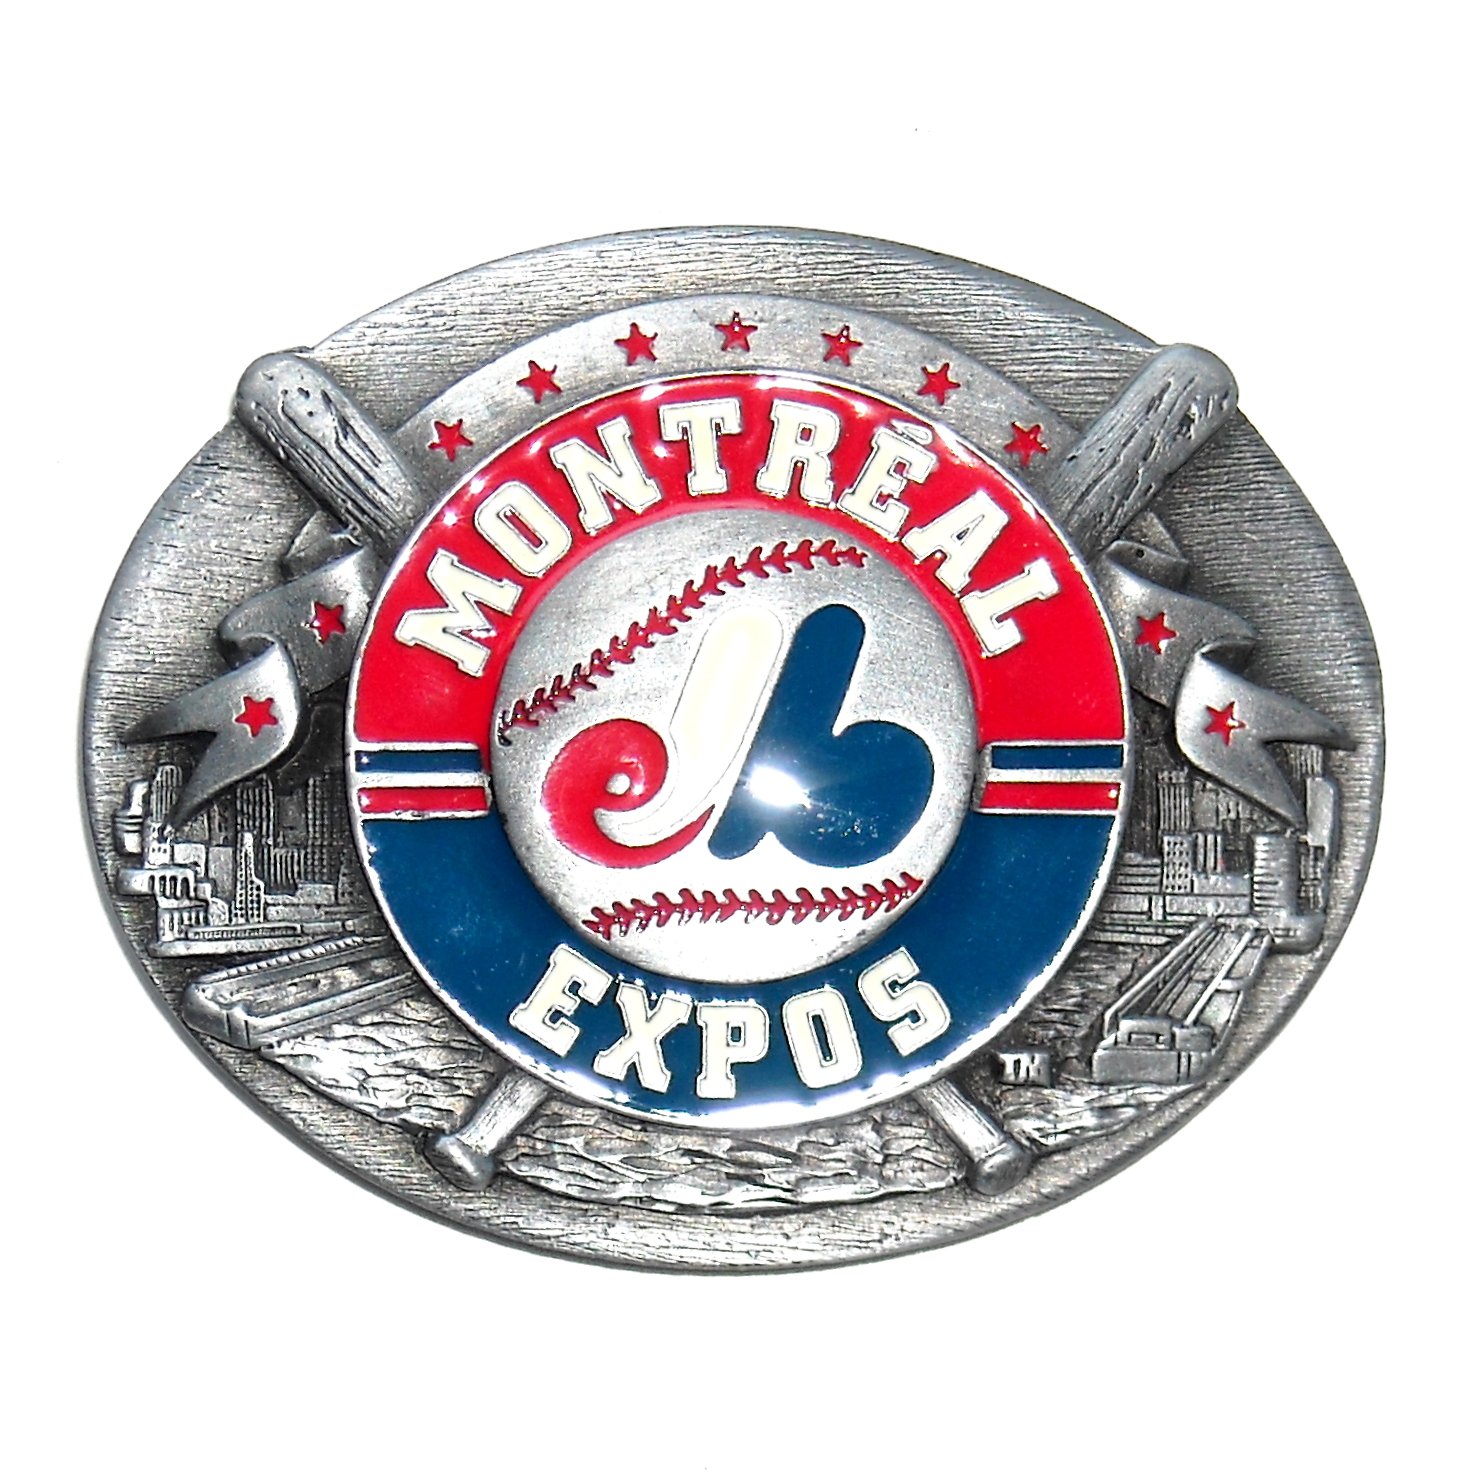 Montreal Expos - Wikipedia